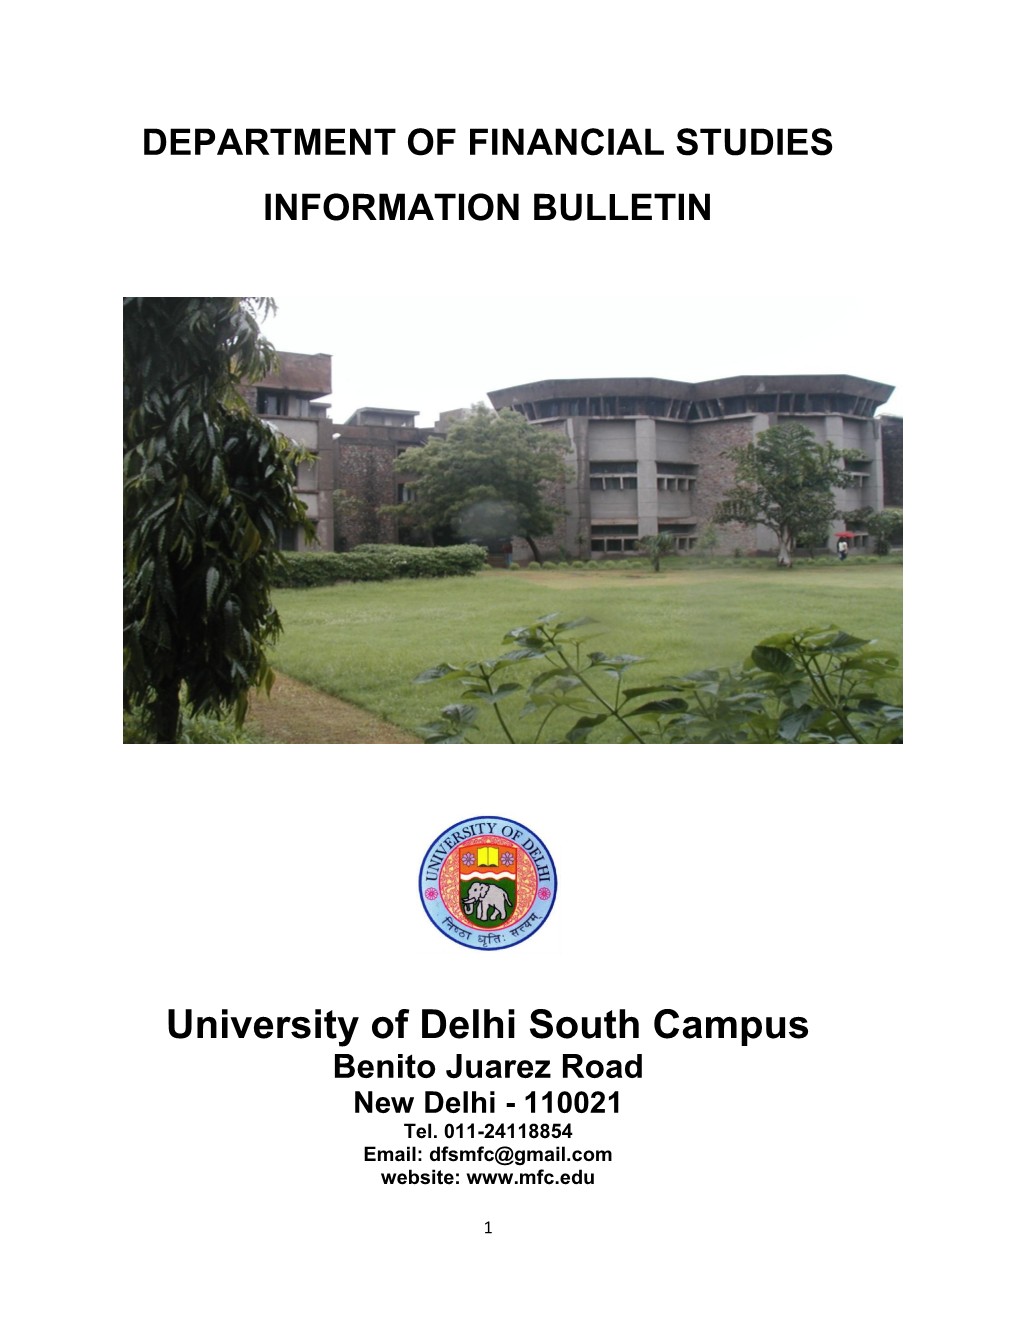 University of Delhi South Campus Benito Juarez Road New Delhi - 110021 Tel